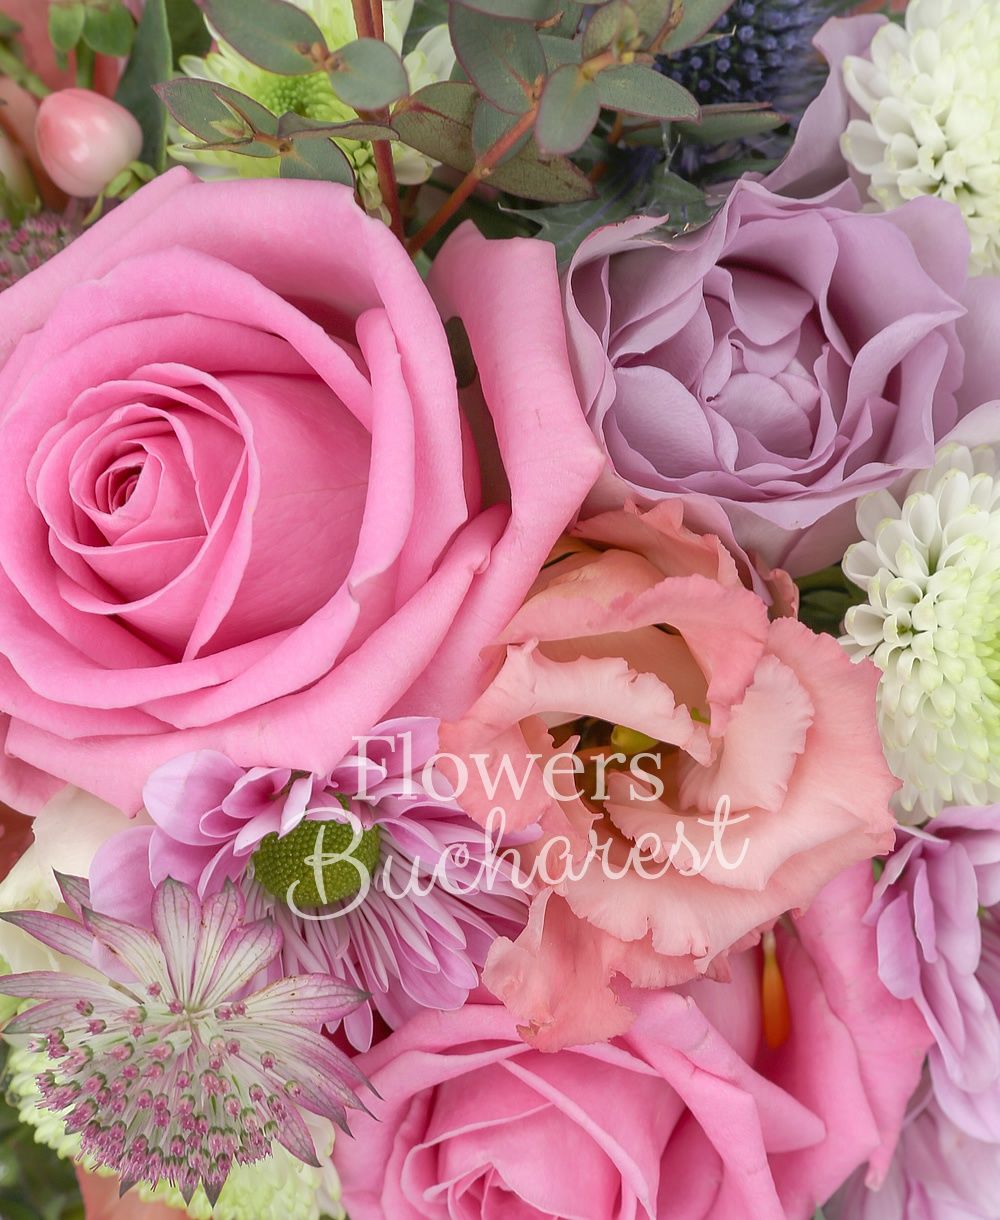 3 pink roses, 2 pink hypericum, 2 mauve roses, 1 eryngium, 1 white santini, 2 pink lisianthus, 2 pink astilbe, 1 gypsophilla, 1 mauve chrysanthemum